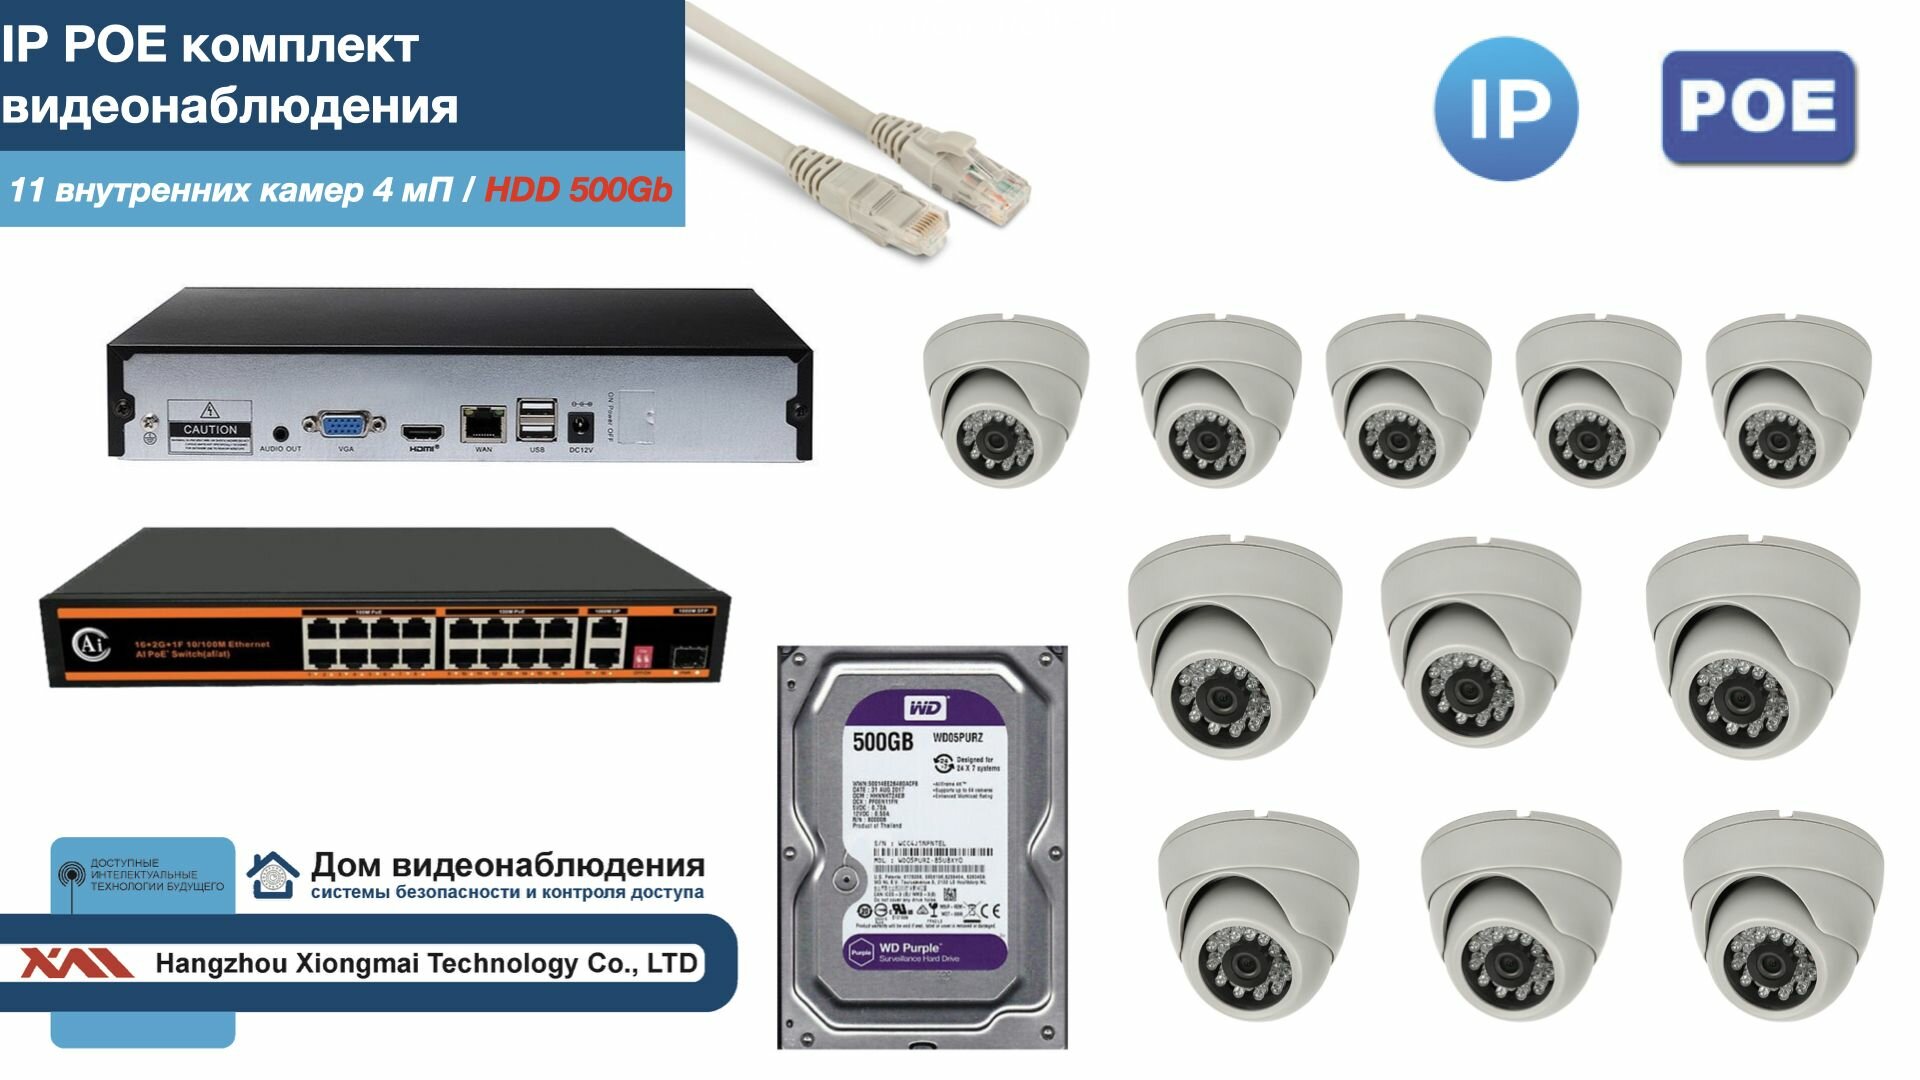 Полный IP POE комплект видеонаблюдения на 11 камер (KIT11IPPOE300W4MP-HDD500Gb)